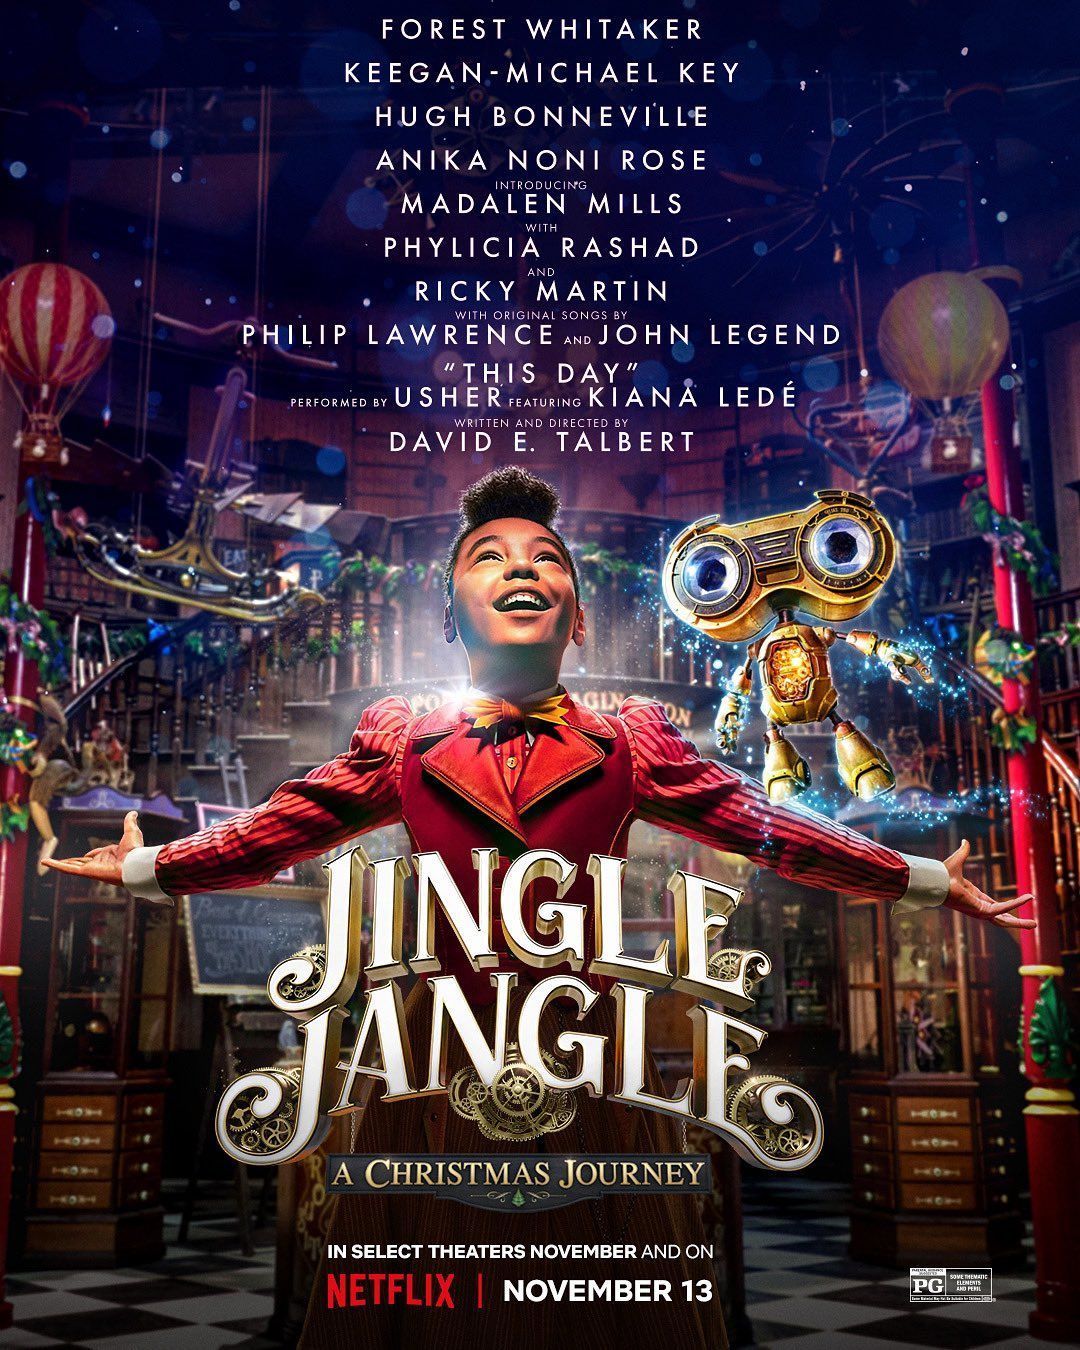 Jingle Jangle: A Christmas Journey' trailer makes fans feel X'mas spirit already